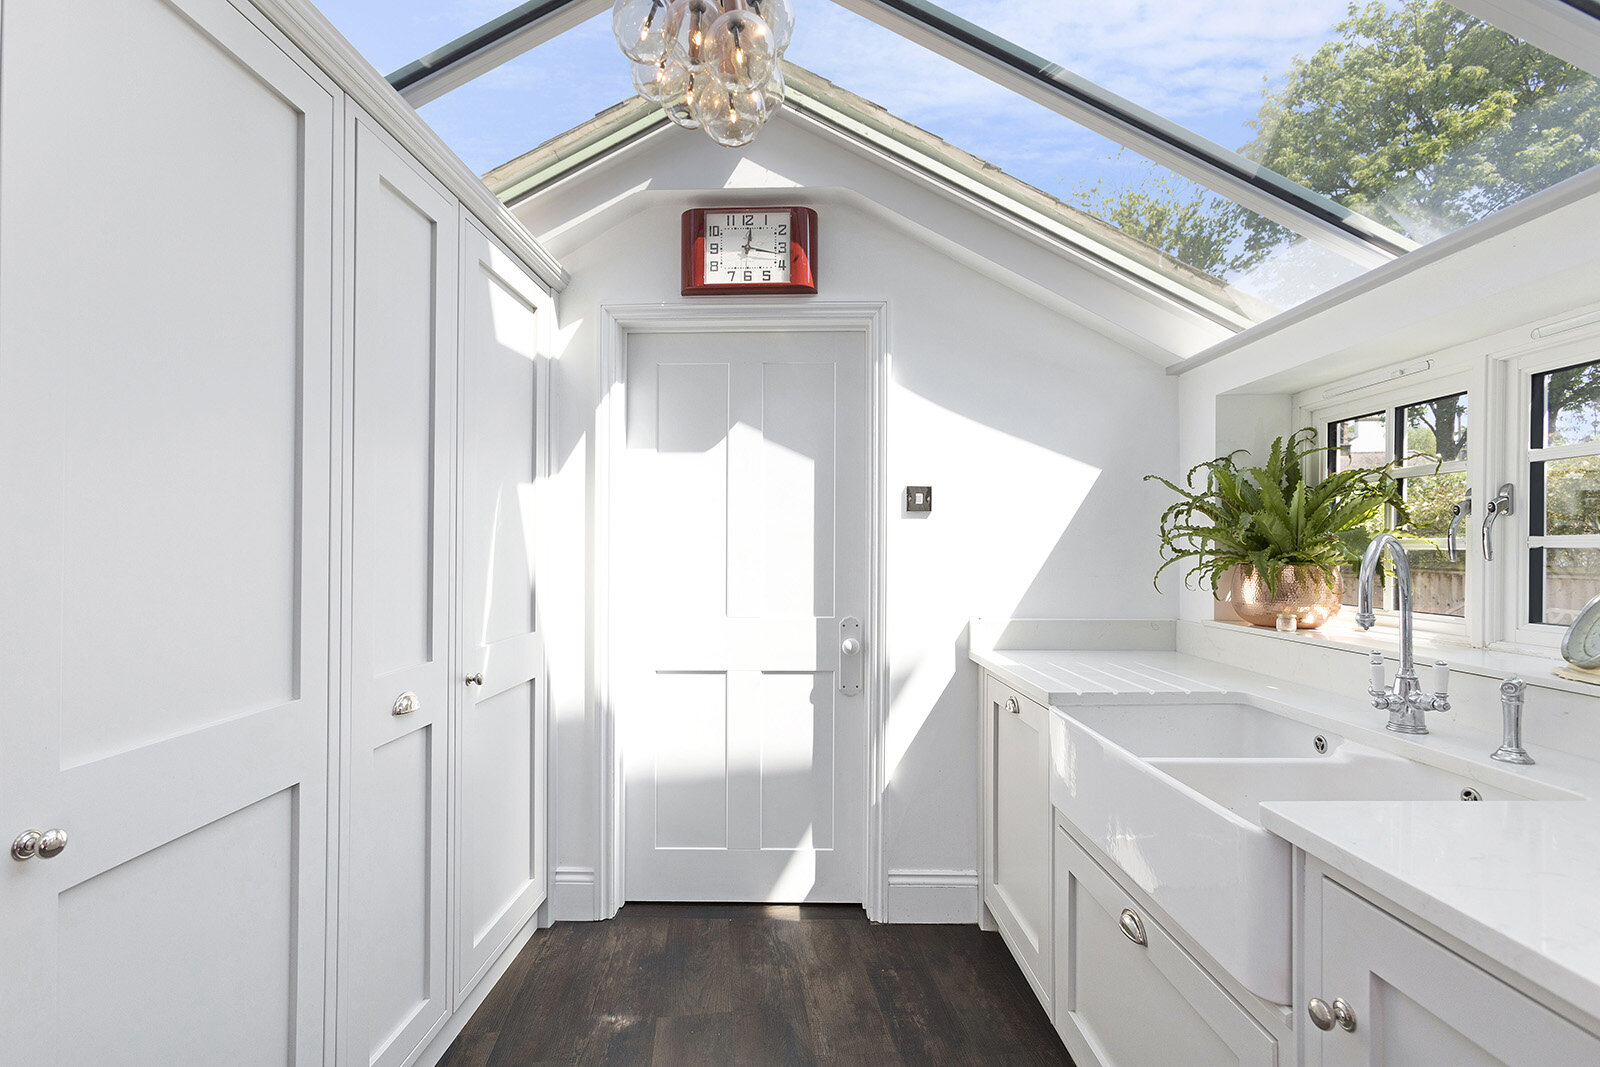 white paint wooden door kitchen bespoke design interior photography thebestshot.co.uk.jpg